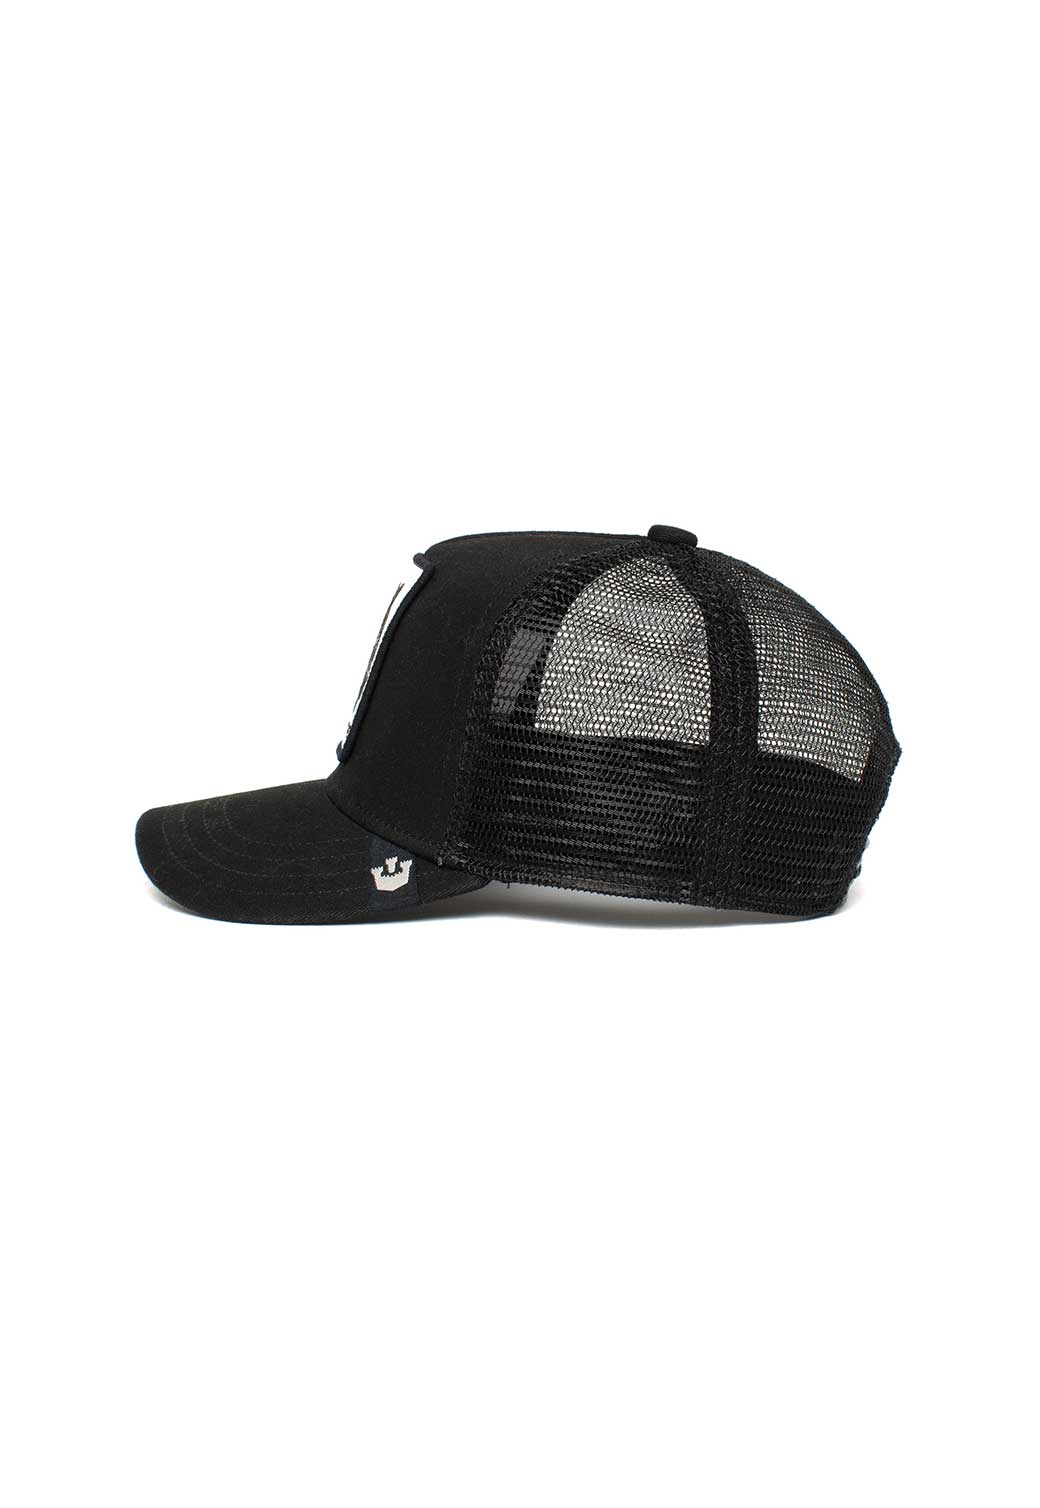 GOORIN - כובע מצחייה LITTLE PANTHER בצבע שחור - MASHBIR//365